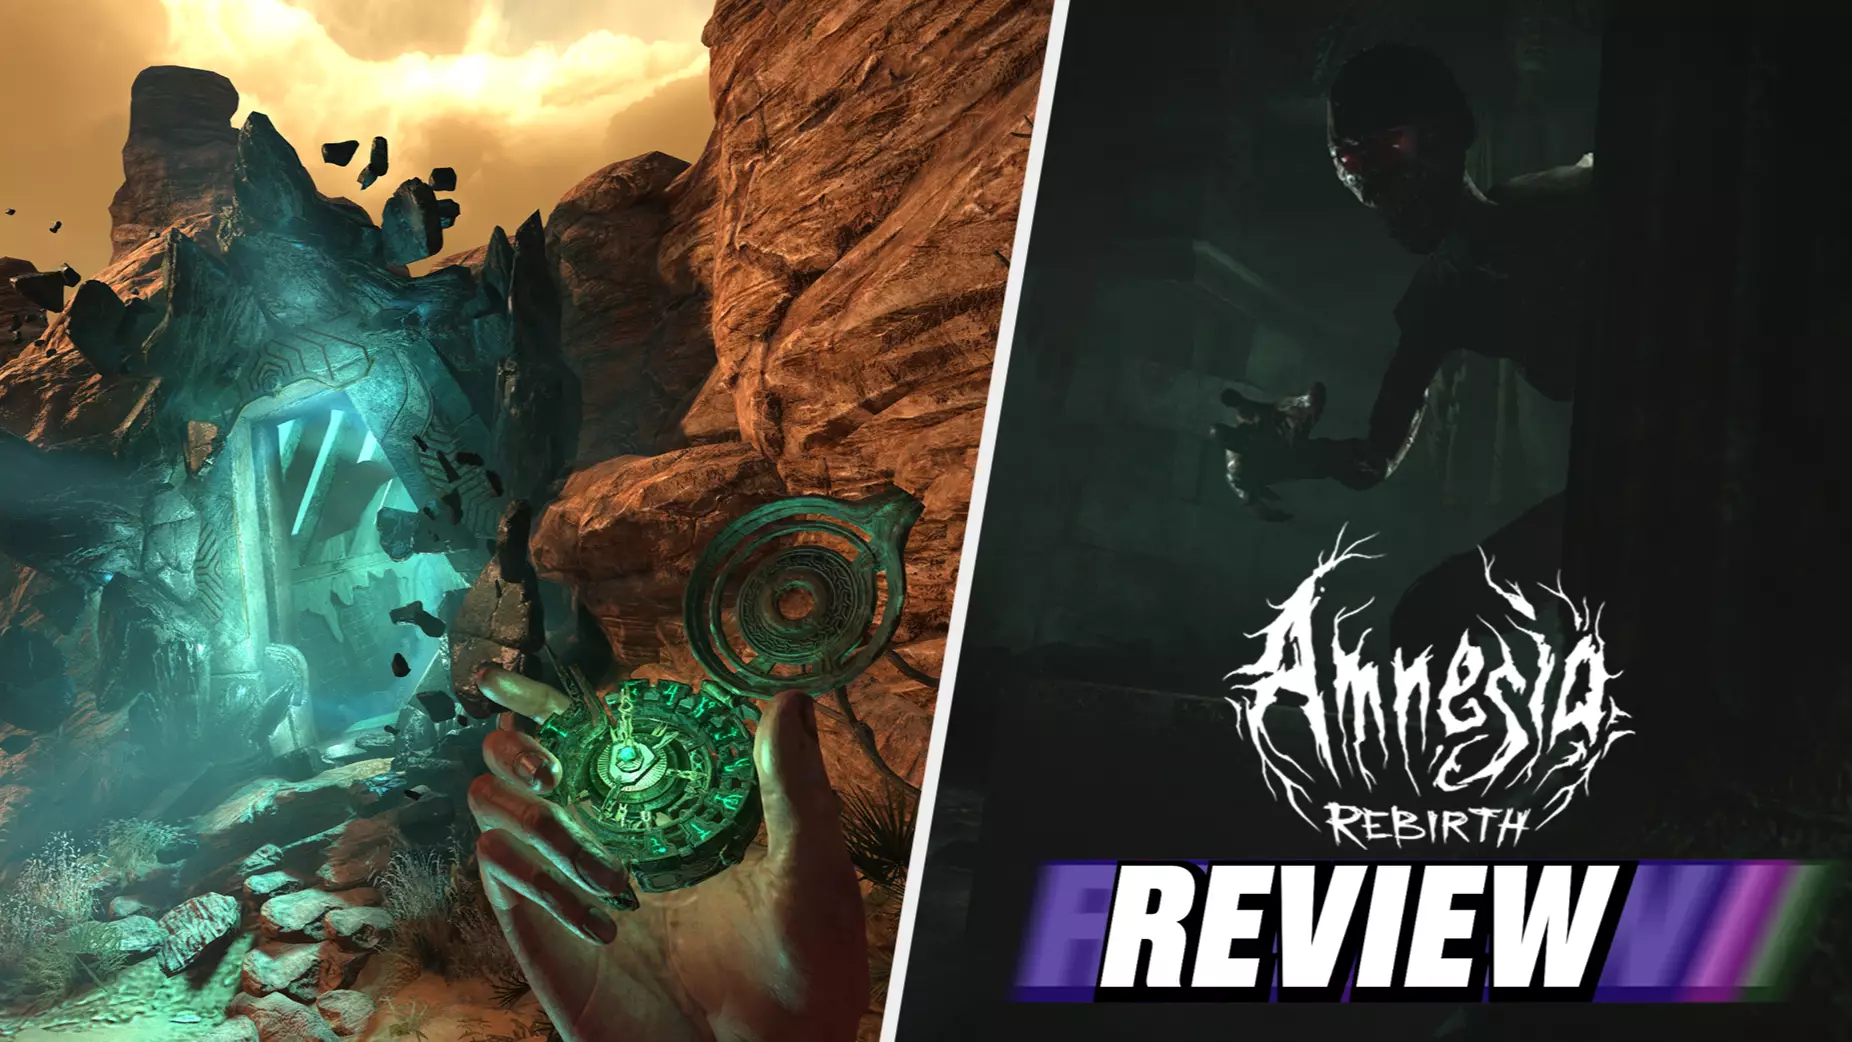 ‘Amnesia: Rebirth’ Review: An Evocative, Ambitious Sequel